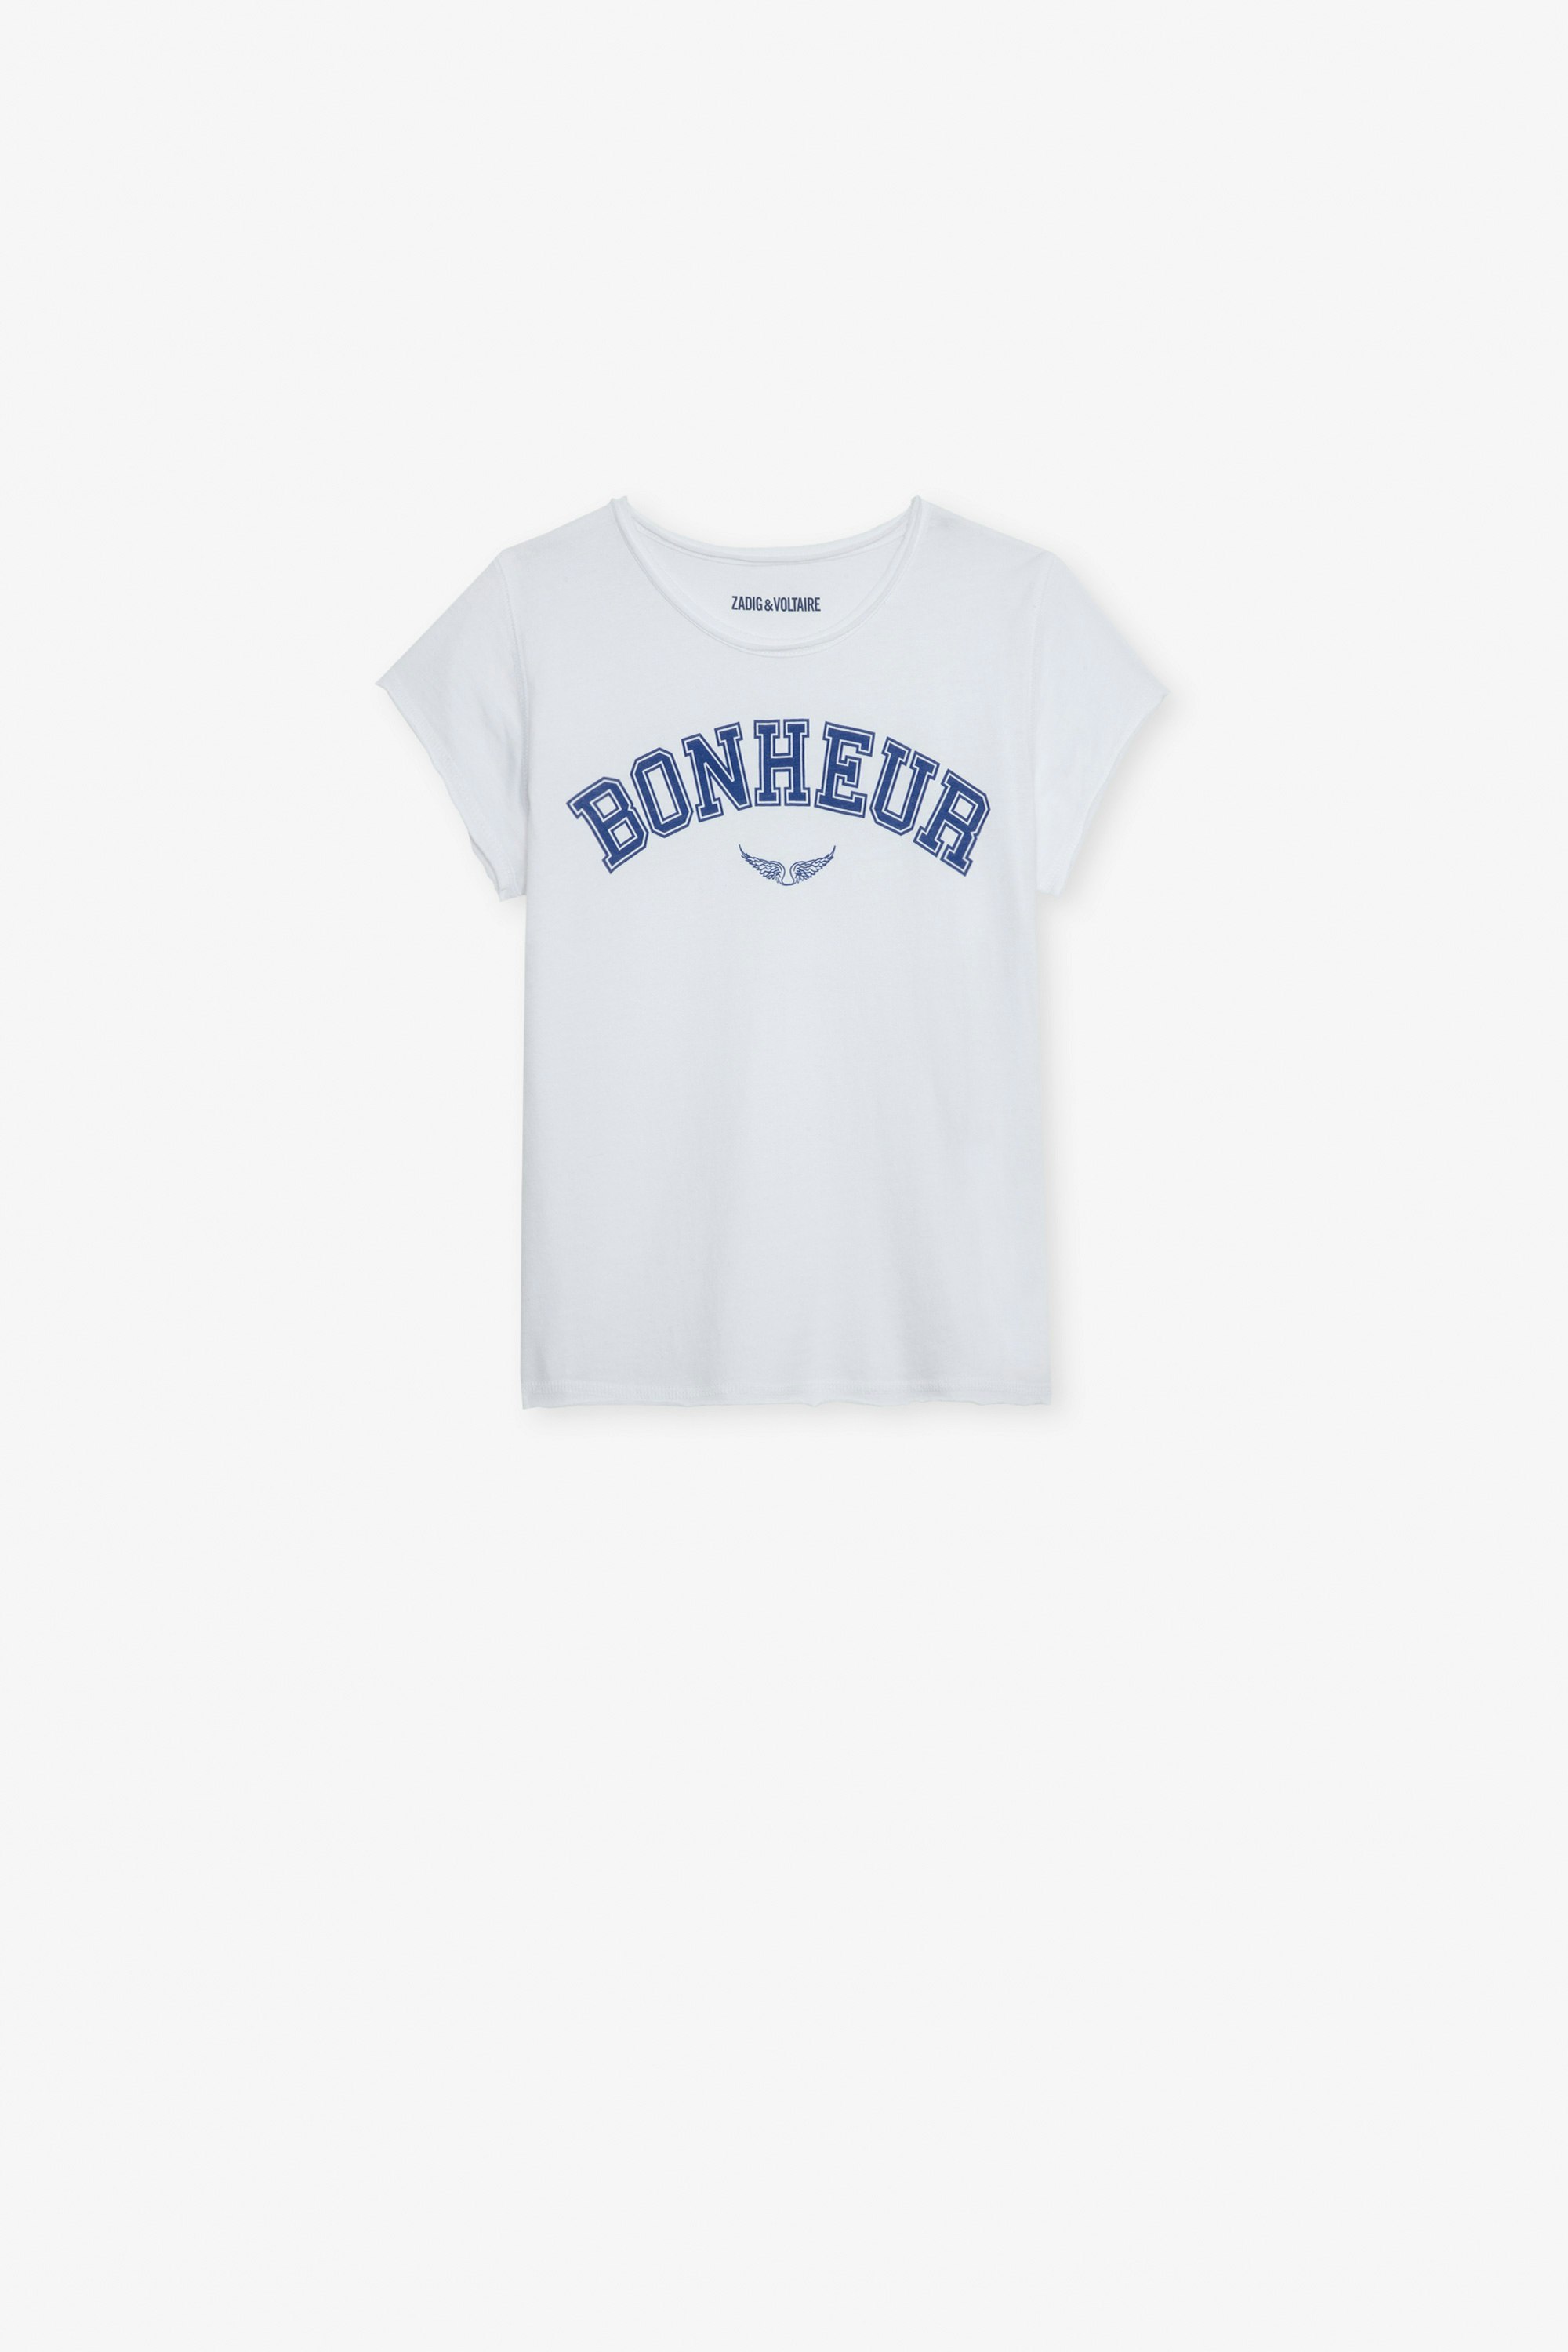 Camiseta Amber Niña Camiseta blanca de punto de algodón de manga corta con mensaje «Bonheur» para niña.